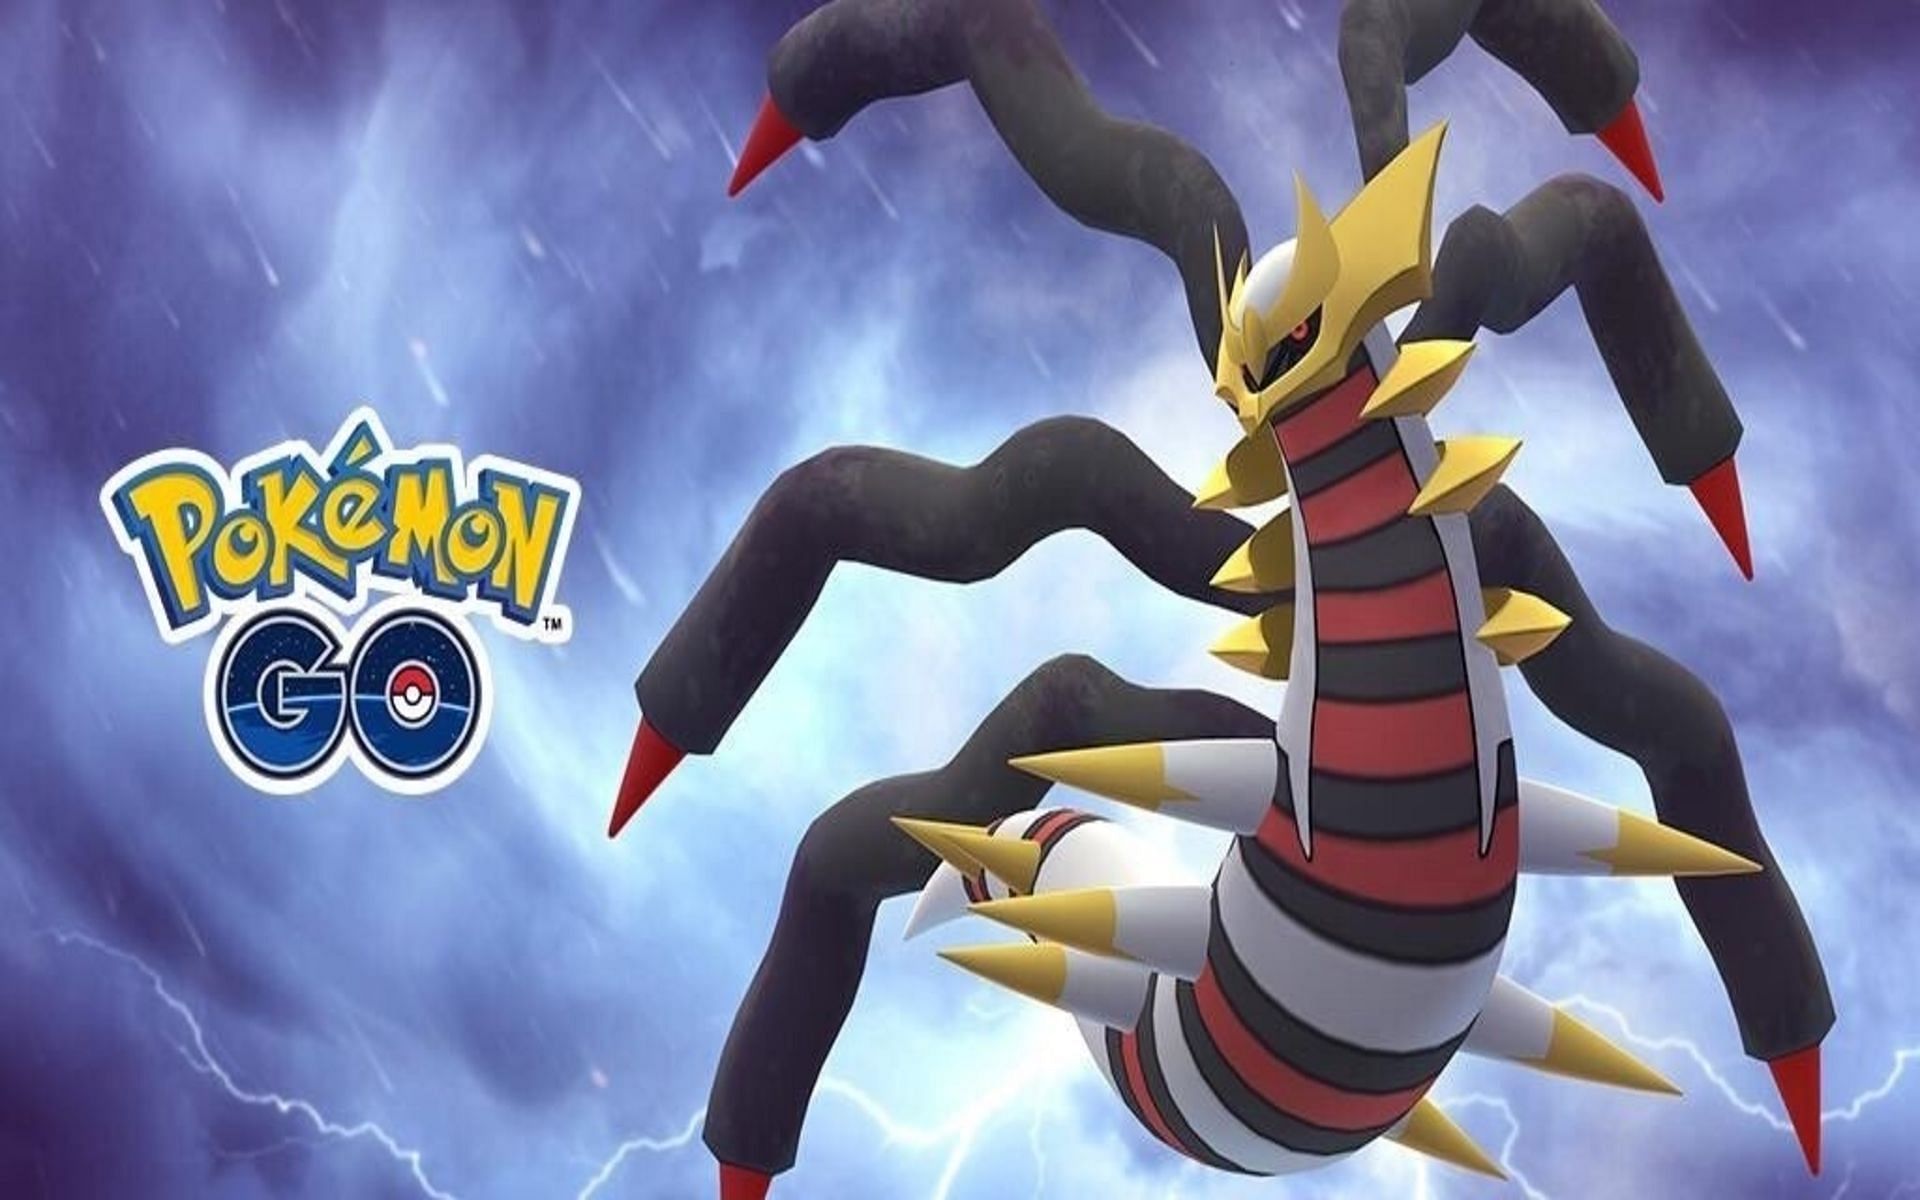 Pokémon Go shiny Giratina altered version ~ unregistered ~ reliable service  ~